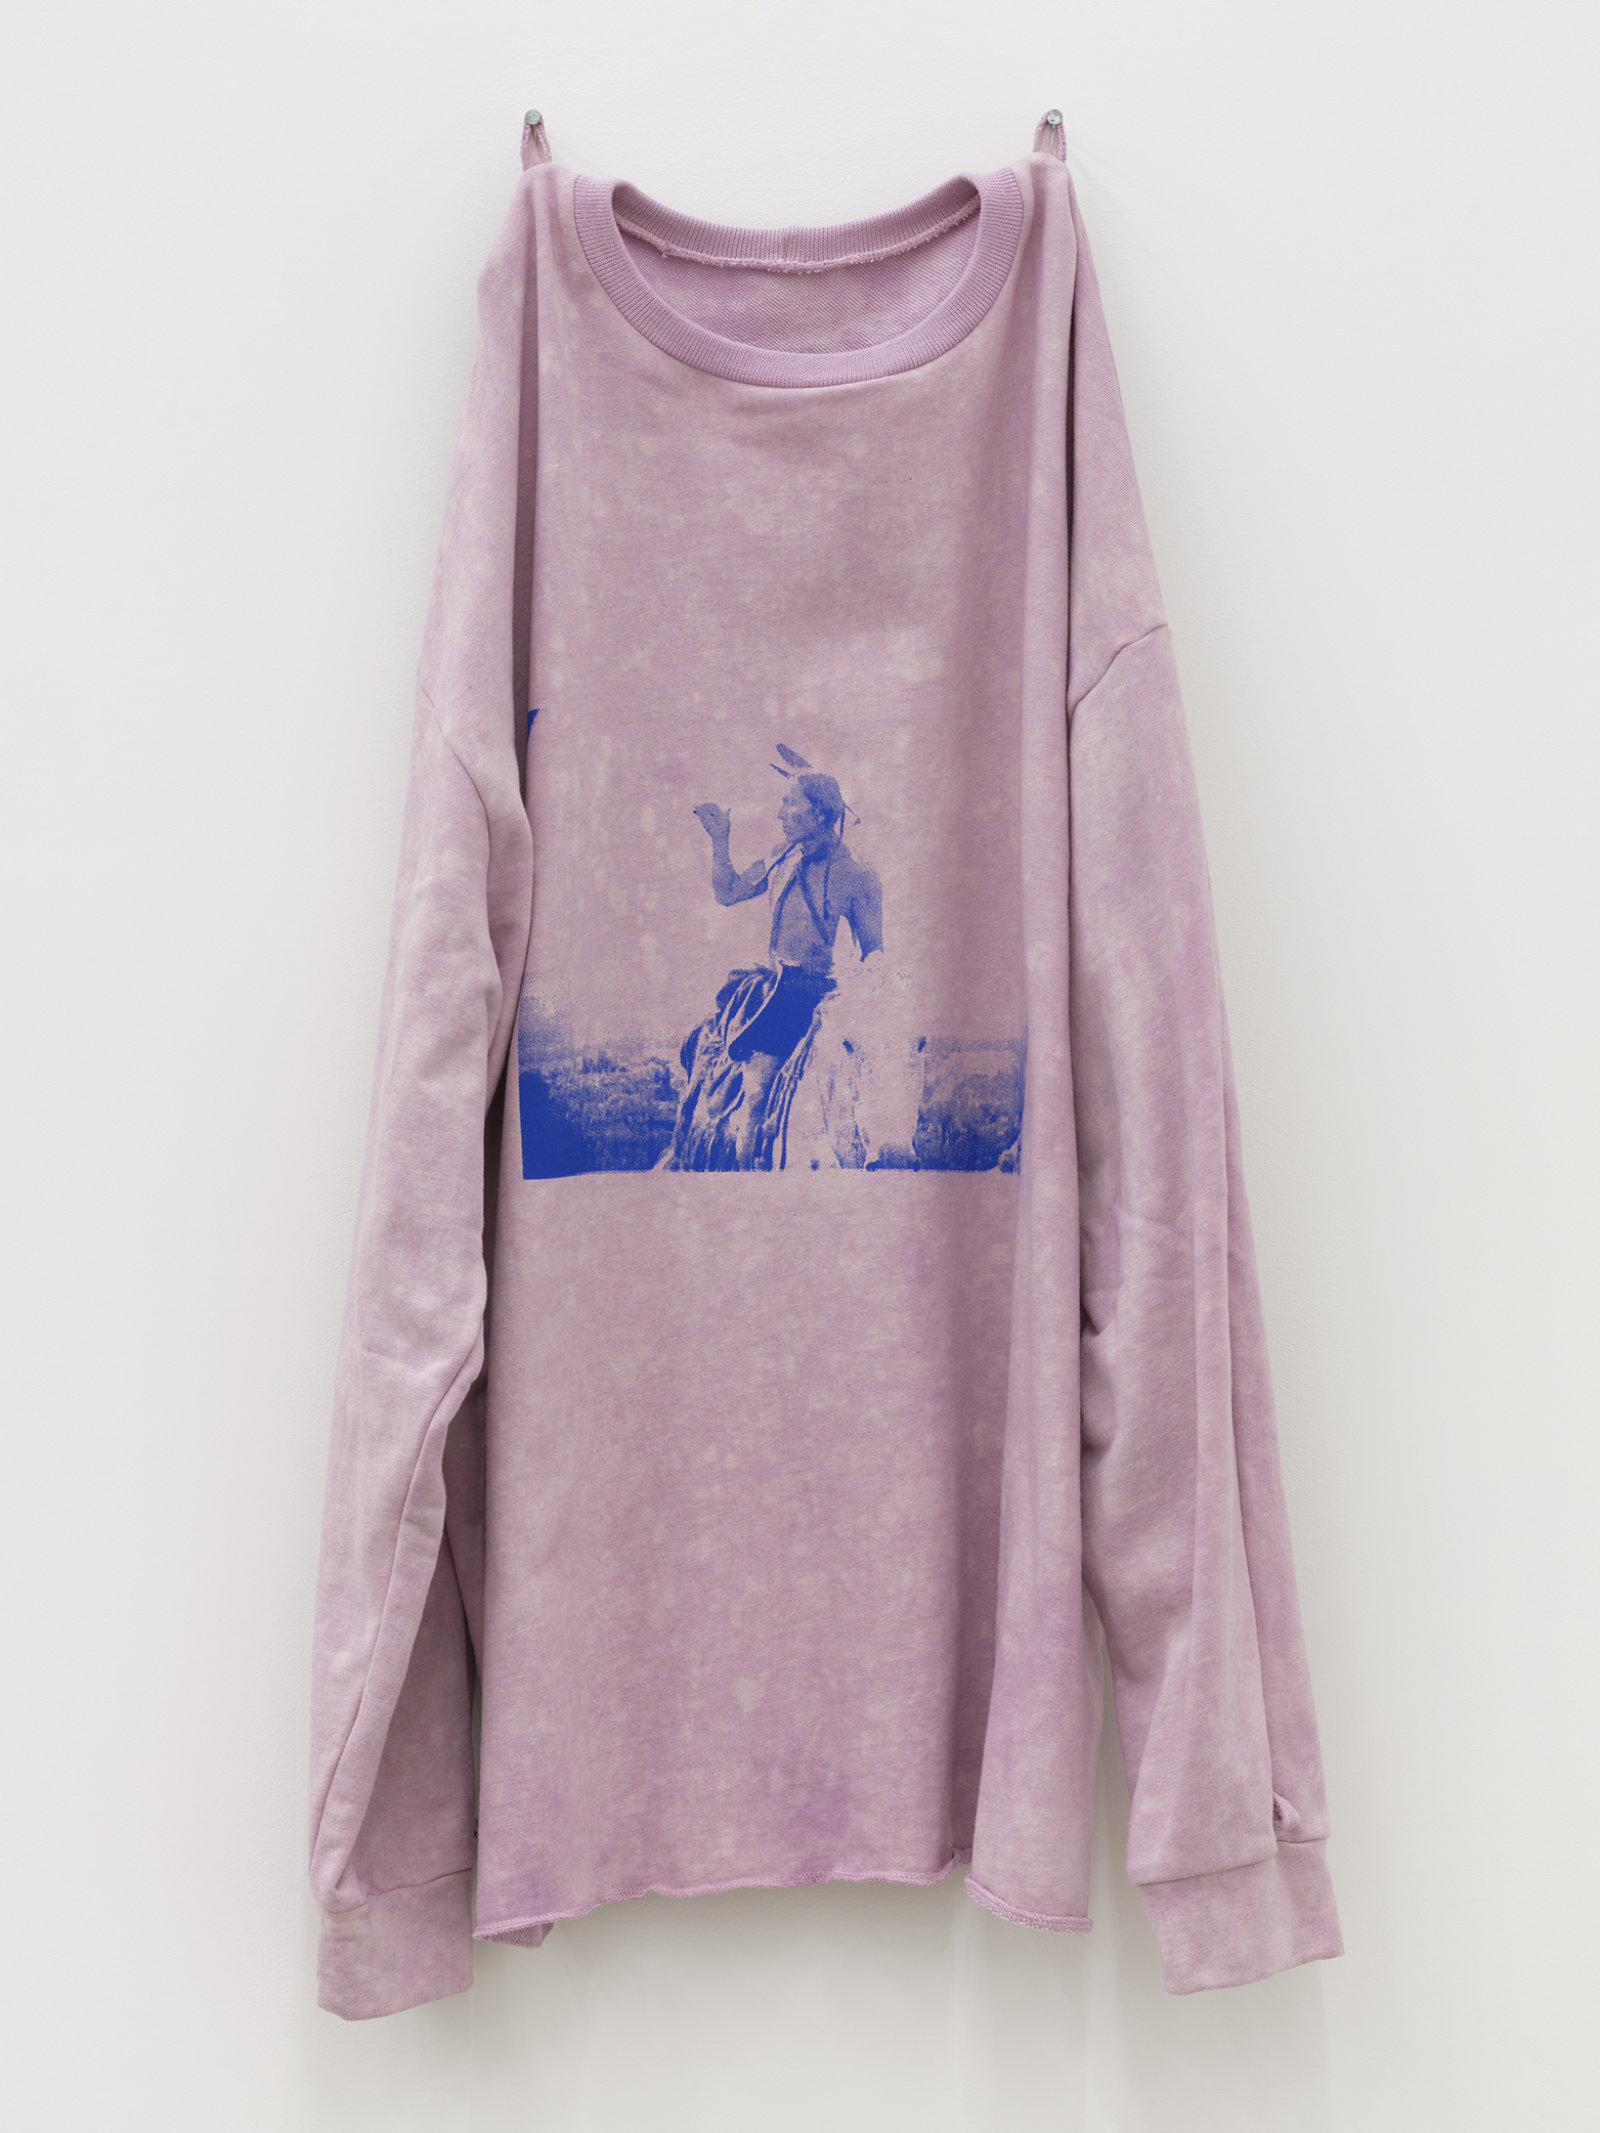 Duane Linklater, whiteeagle, 2020, handmade sweater, cochineal dye, silkscreen, nails, 38 x 20 x 5 in. (97 x 51 x 13 cm)